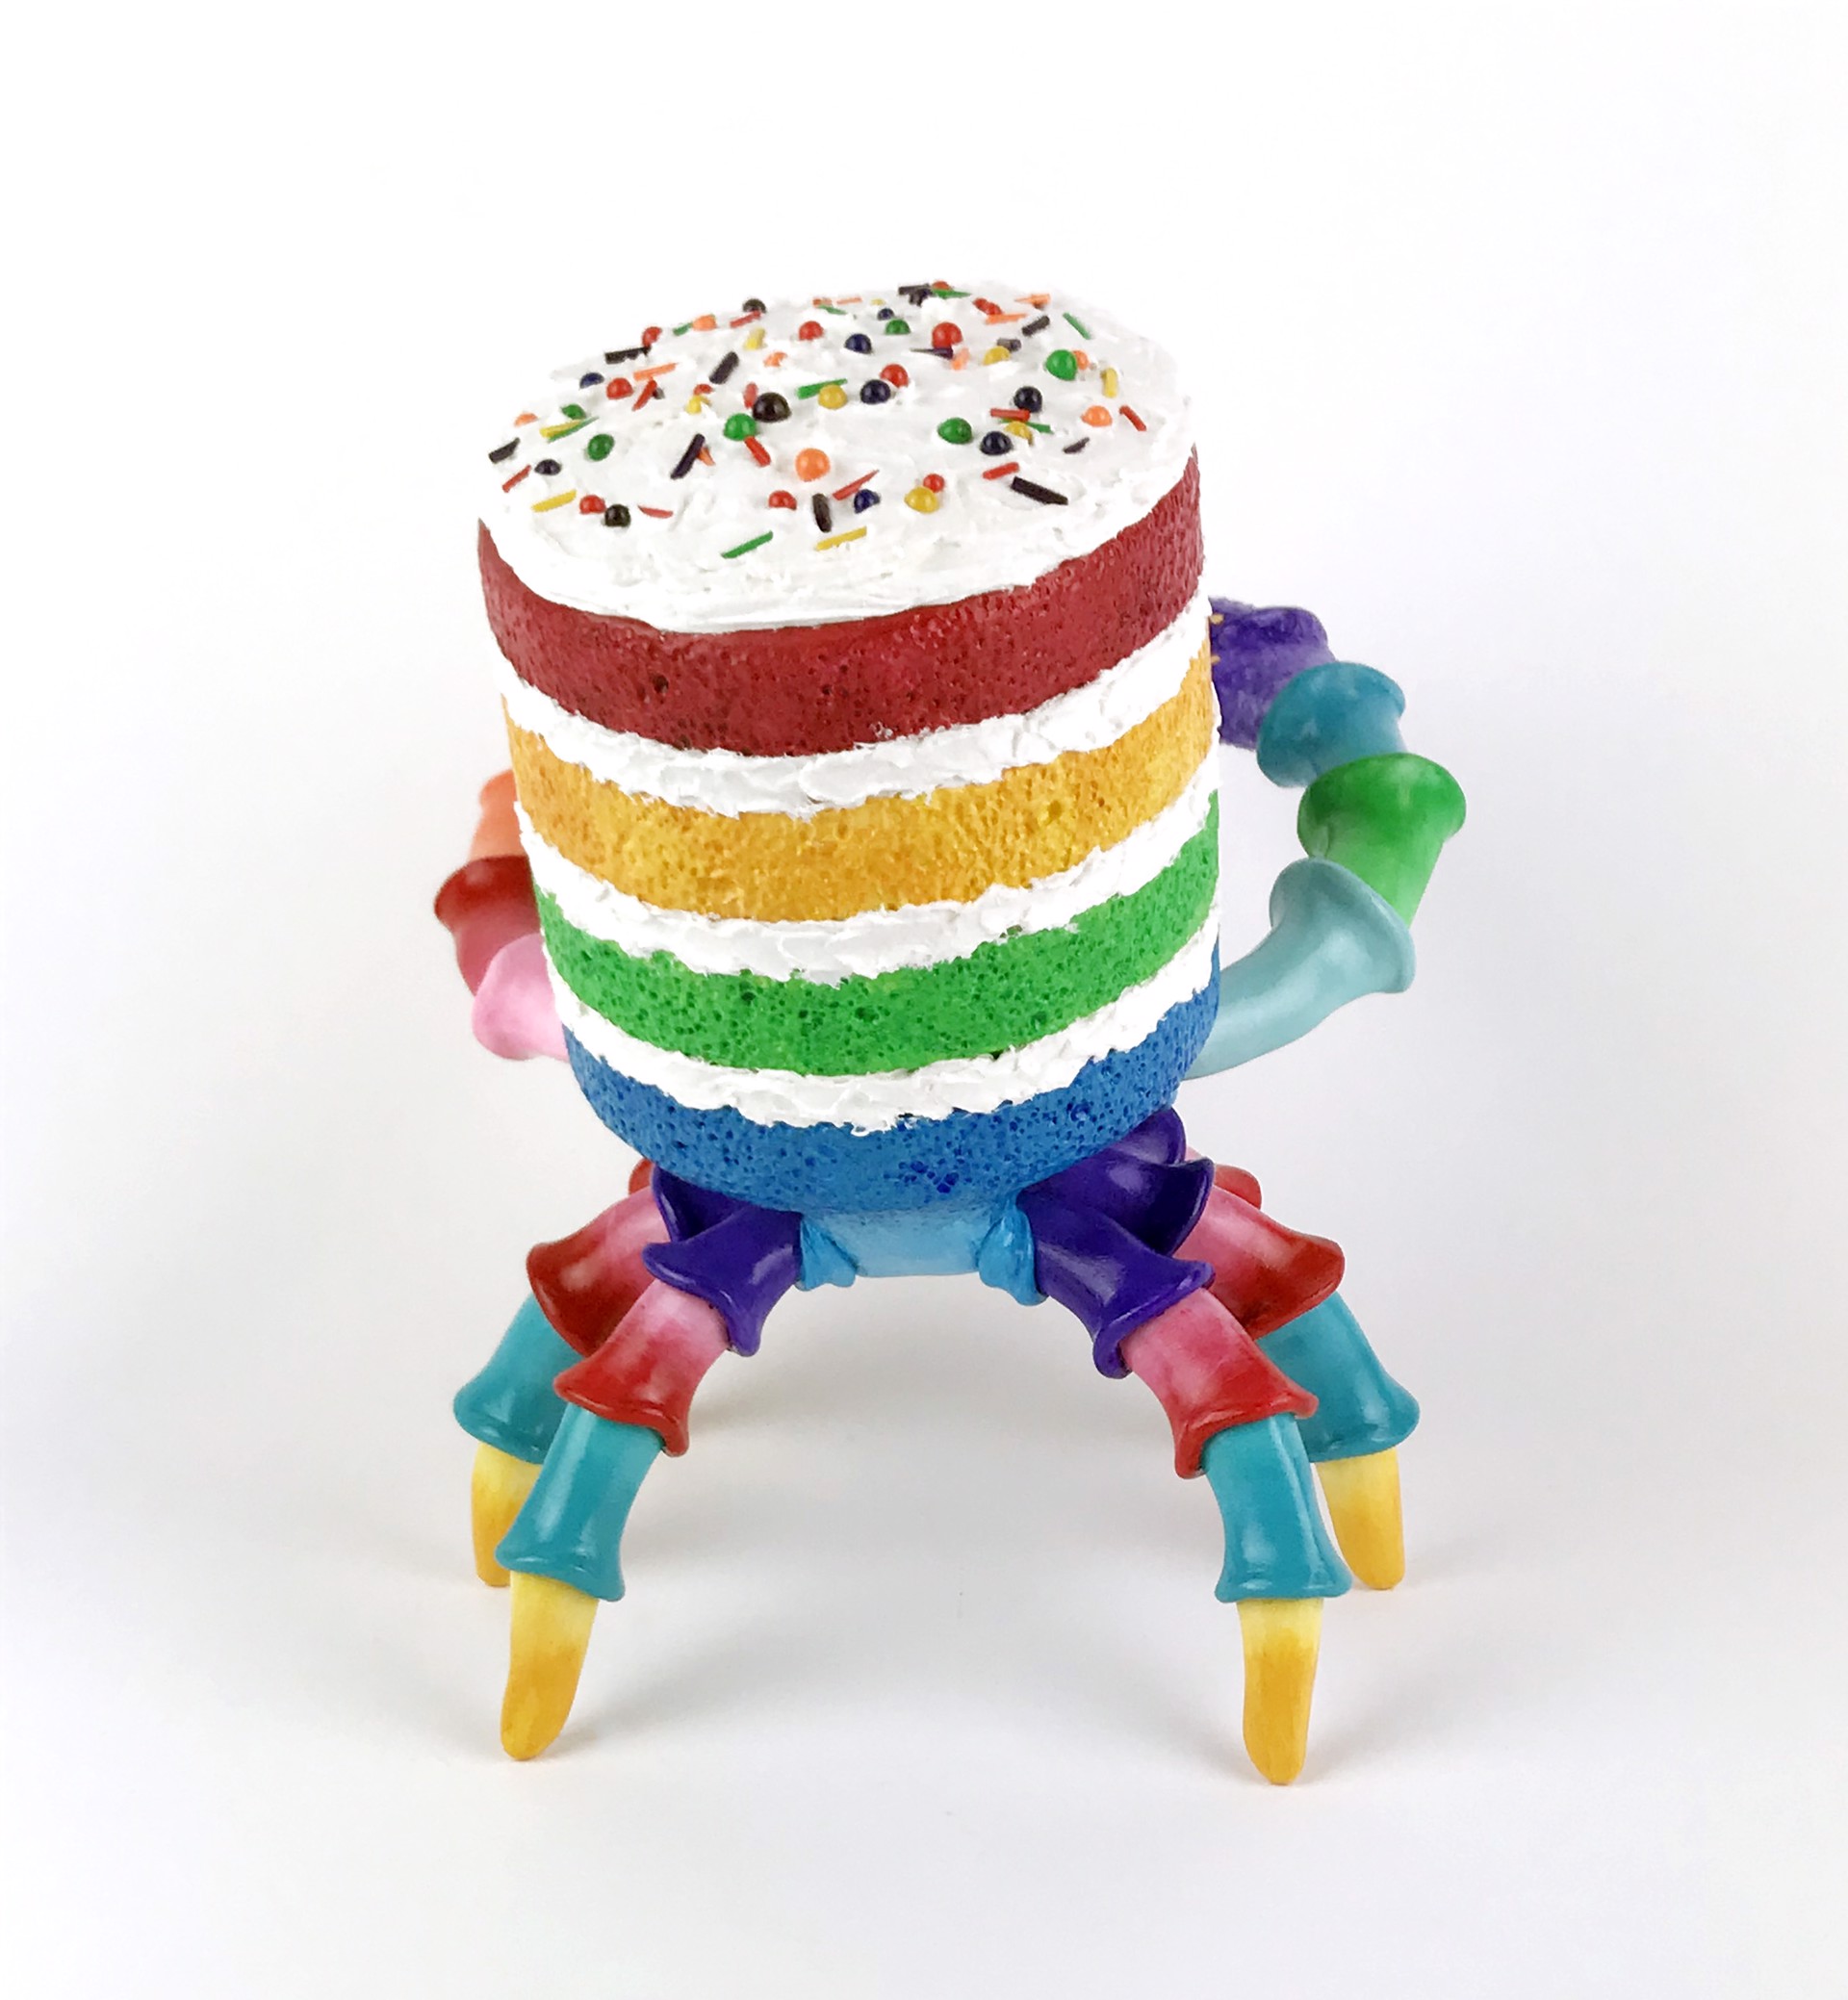 Lil' Rainbow Crabcake by Corina St. Martin